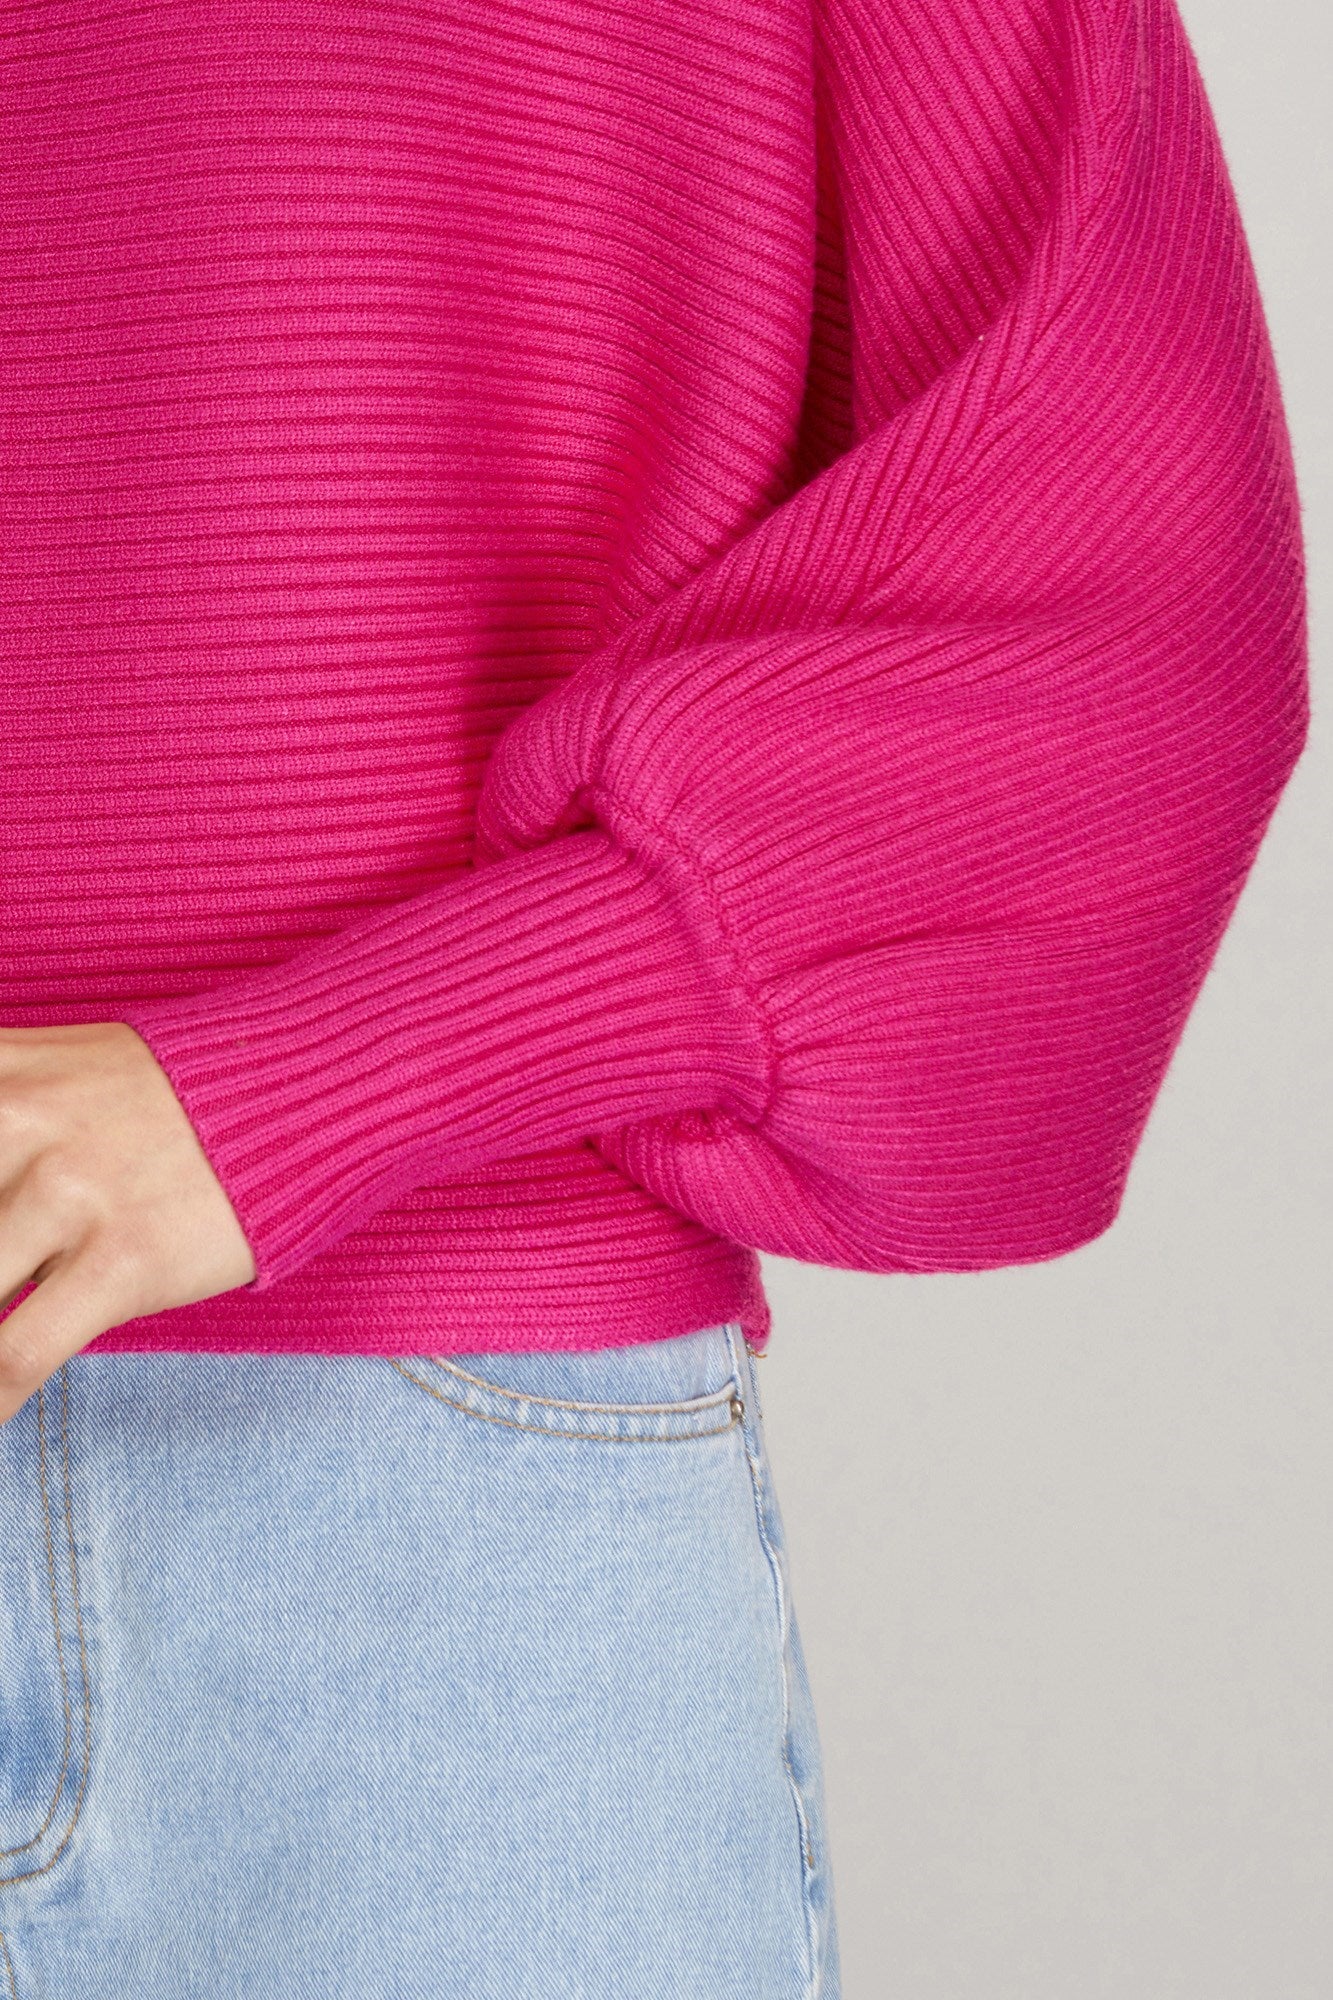 Dolman Sleeve Pink Sweater